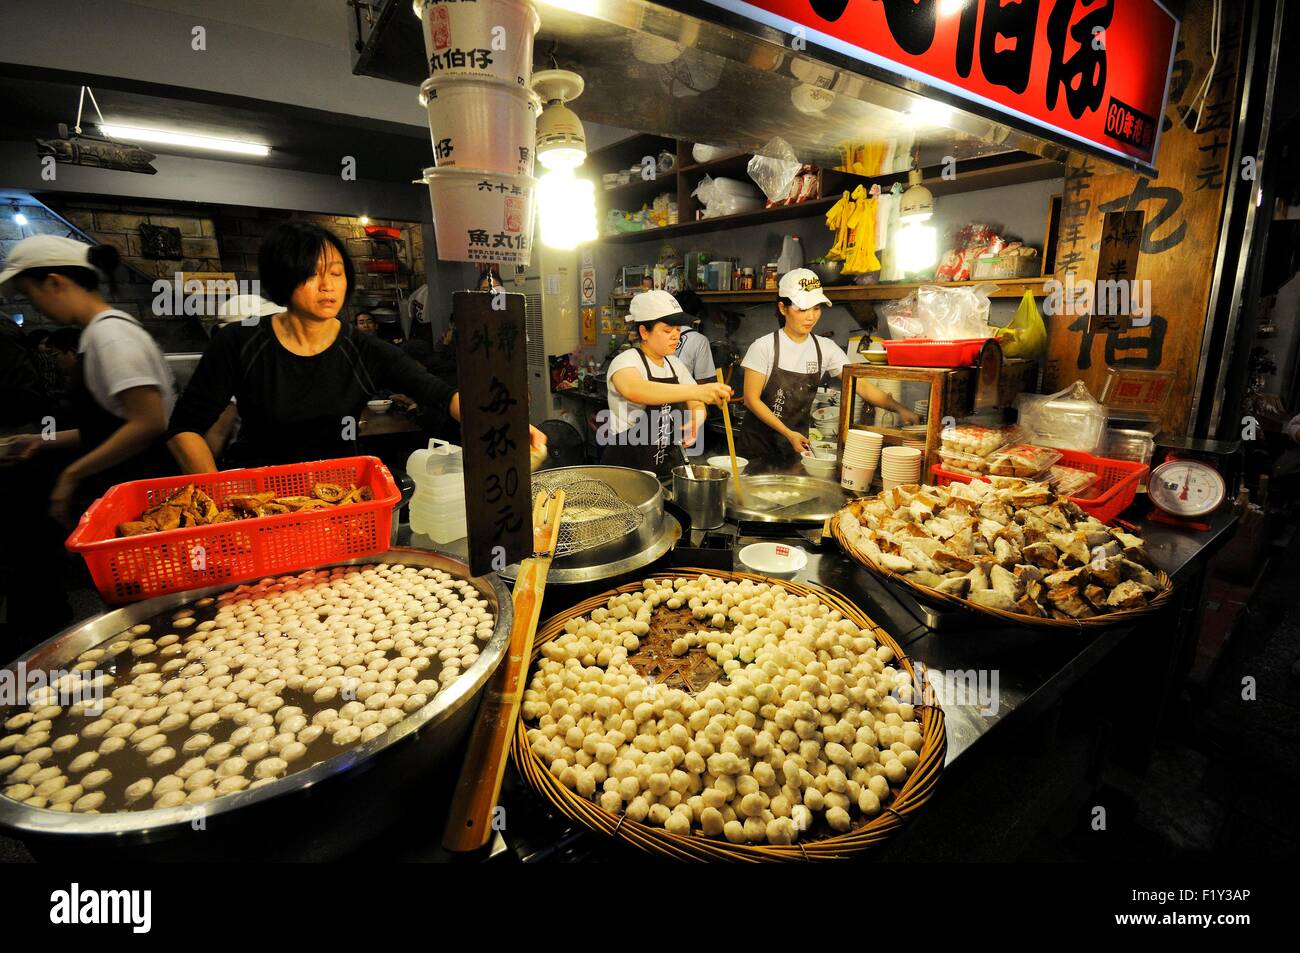 Taiwan, New Taipei City, Ruifang, Jiufen (Chiufen), food shop and restaurant in the main street Stock Photo